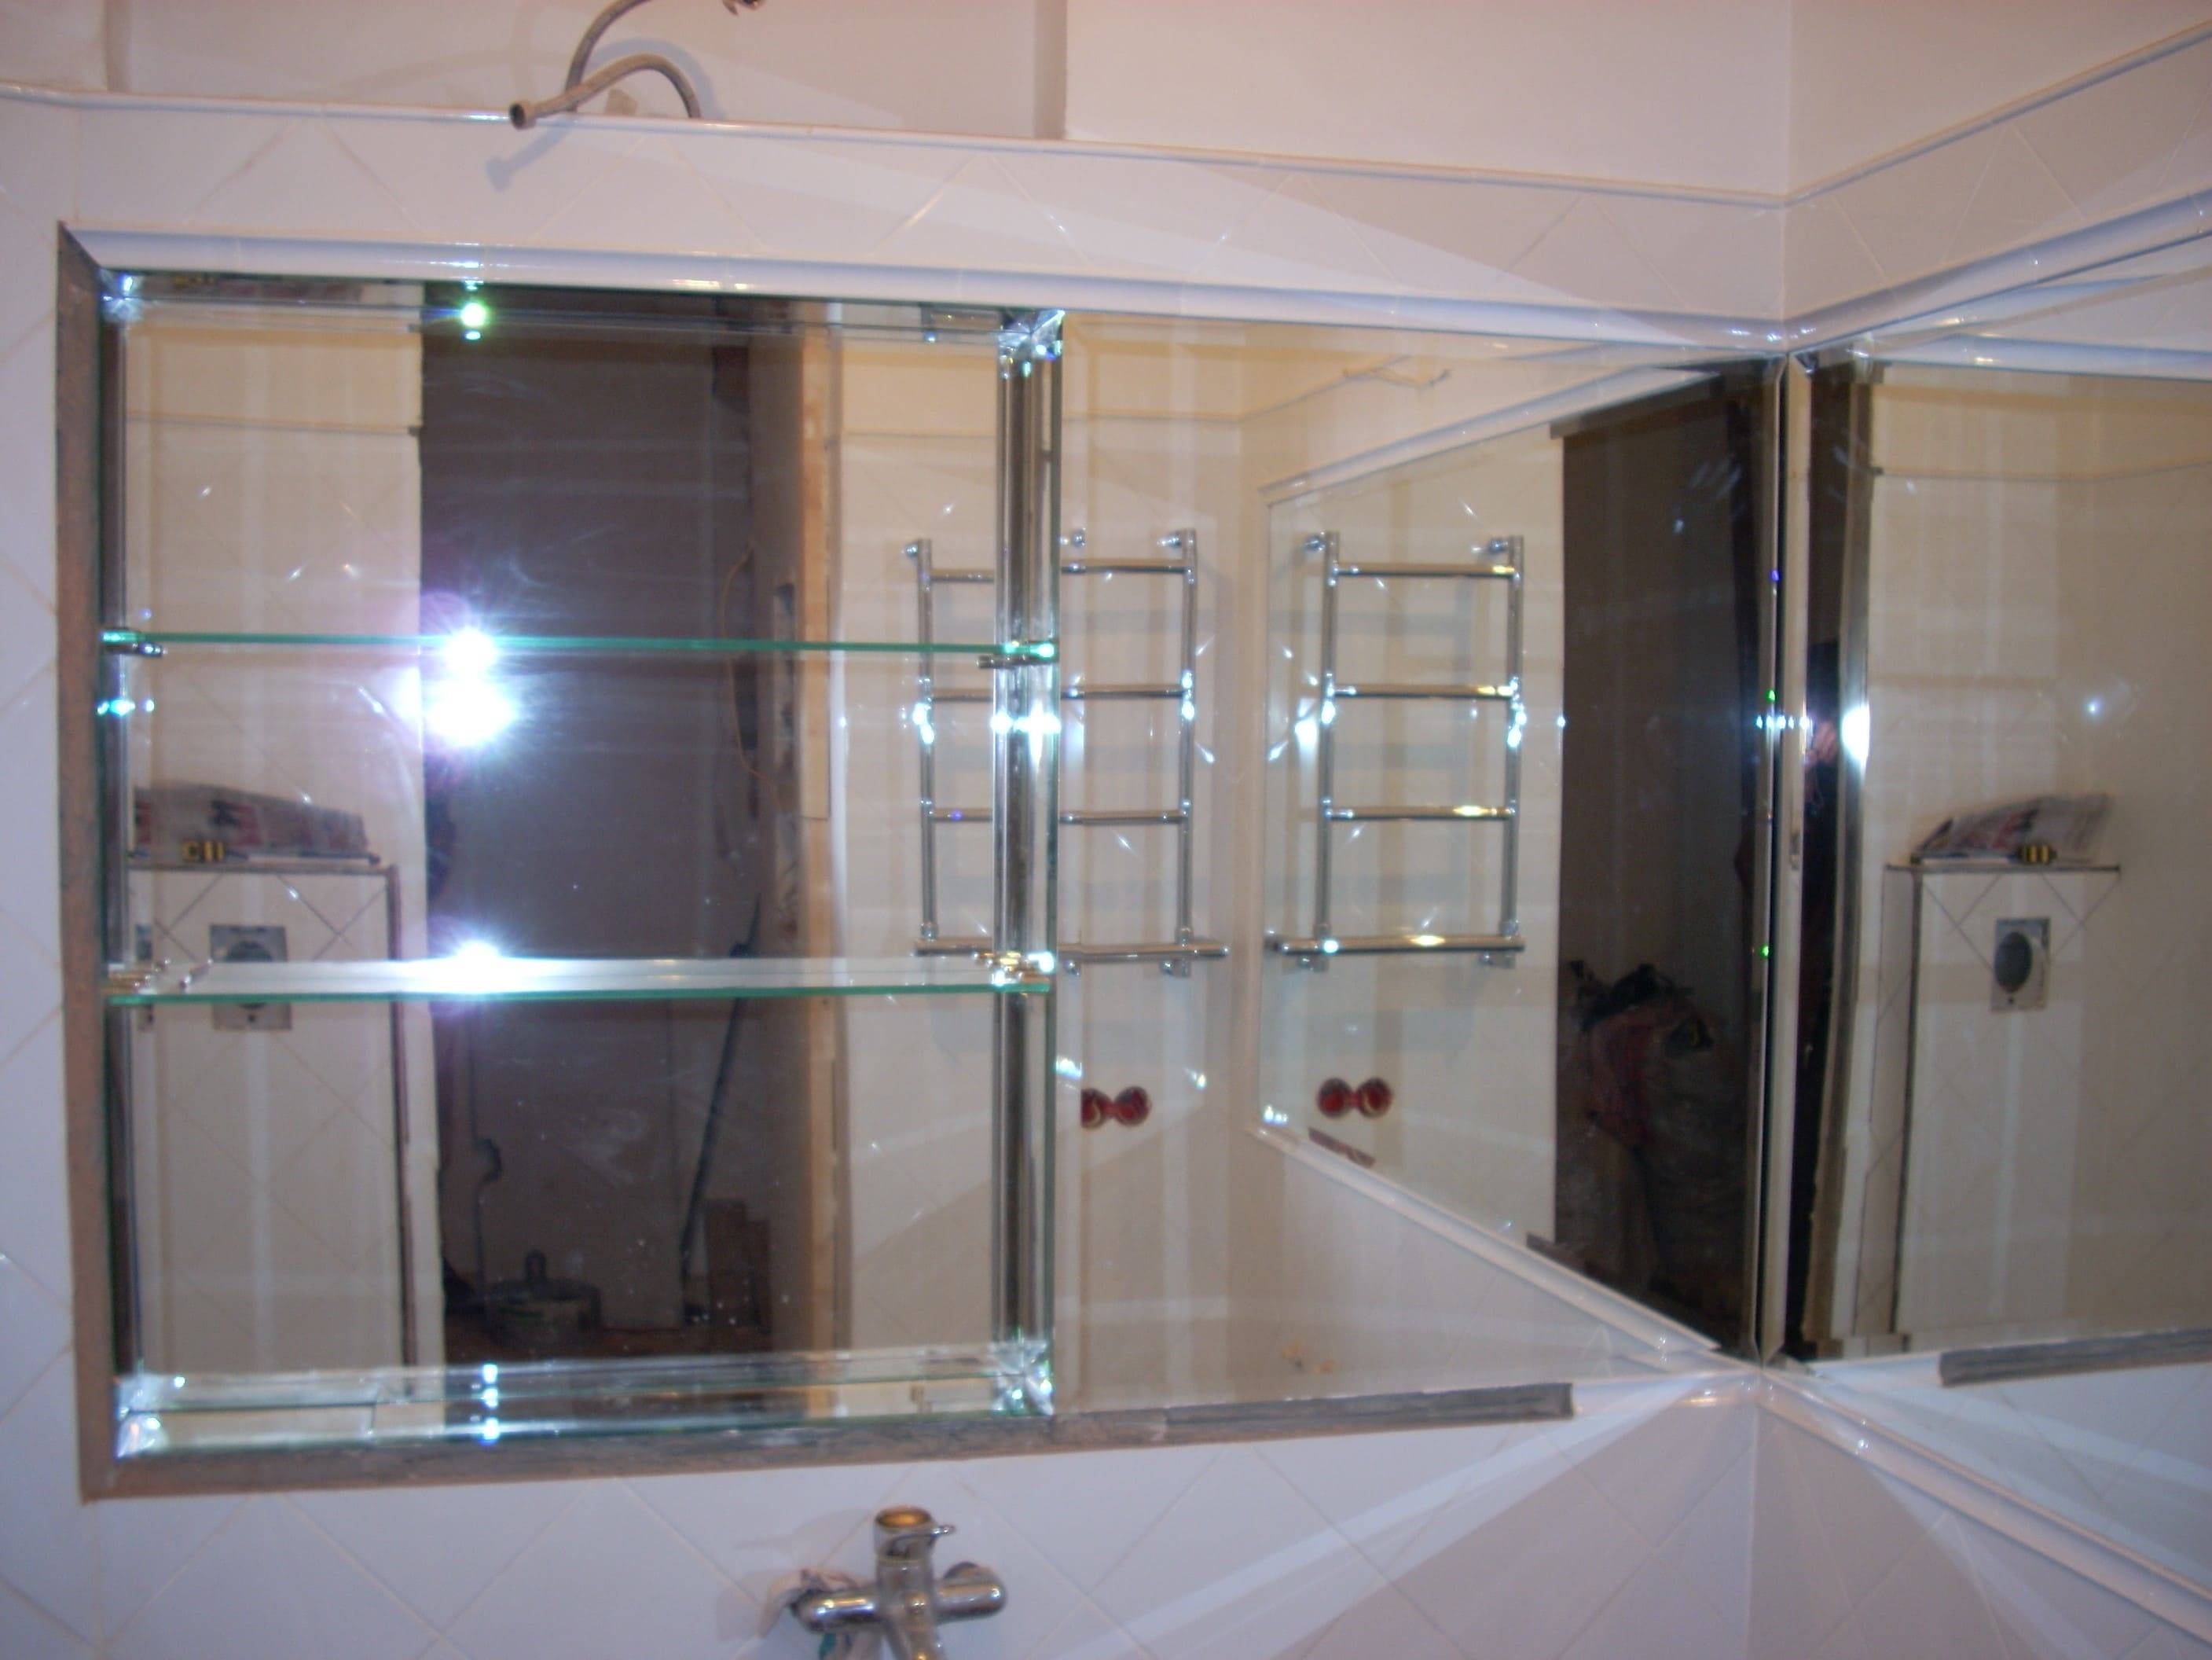 Варианты монтажа зеркала на стене ванной комнаты: рекомендации